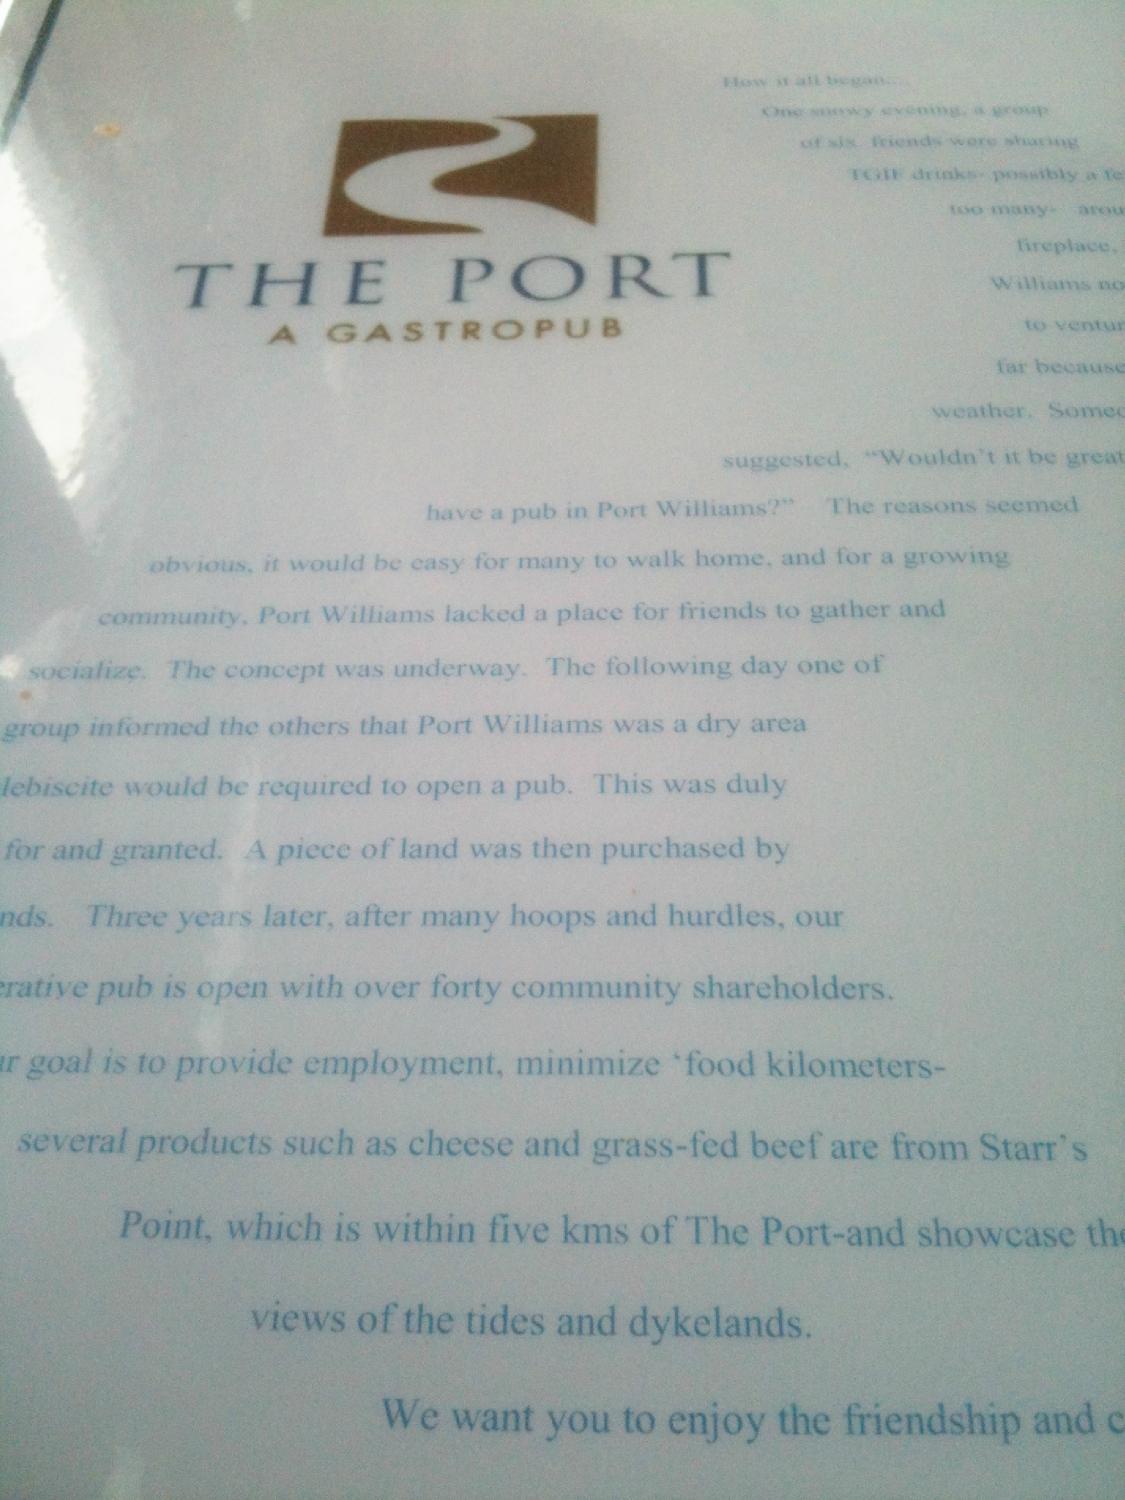 The Port Pub